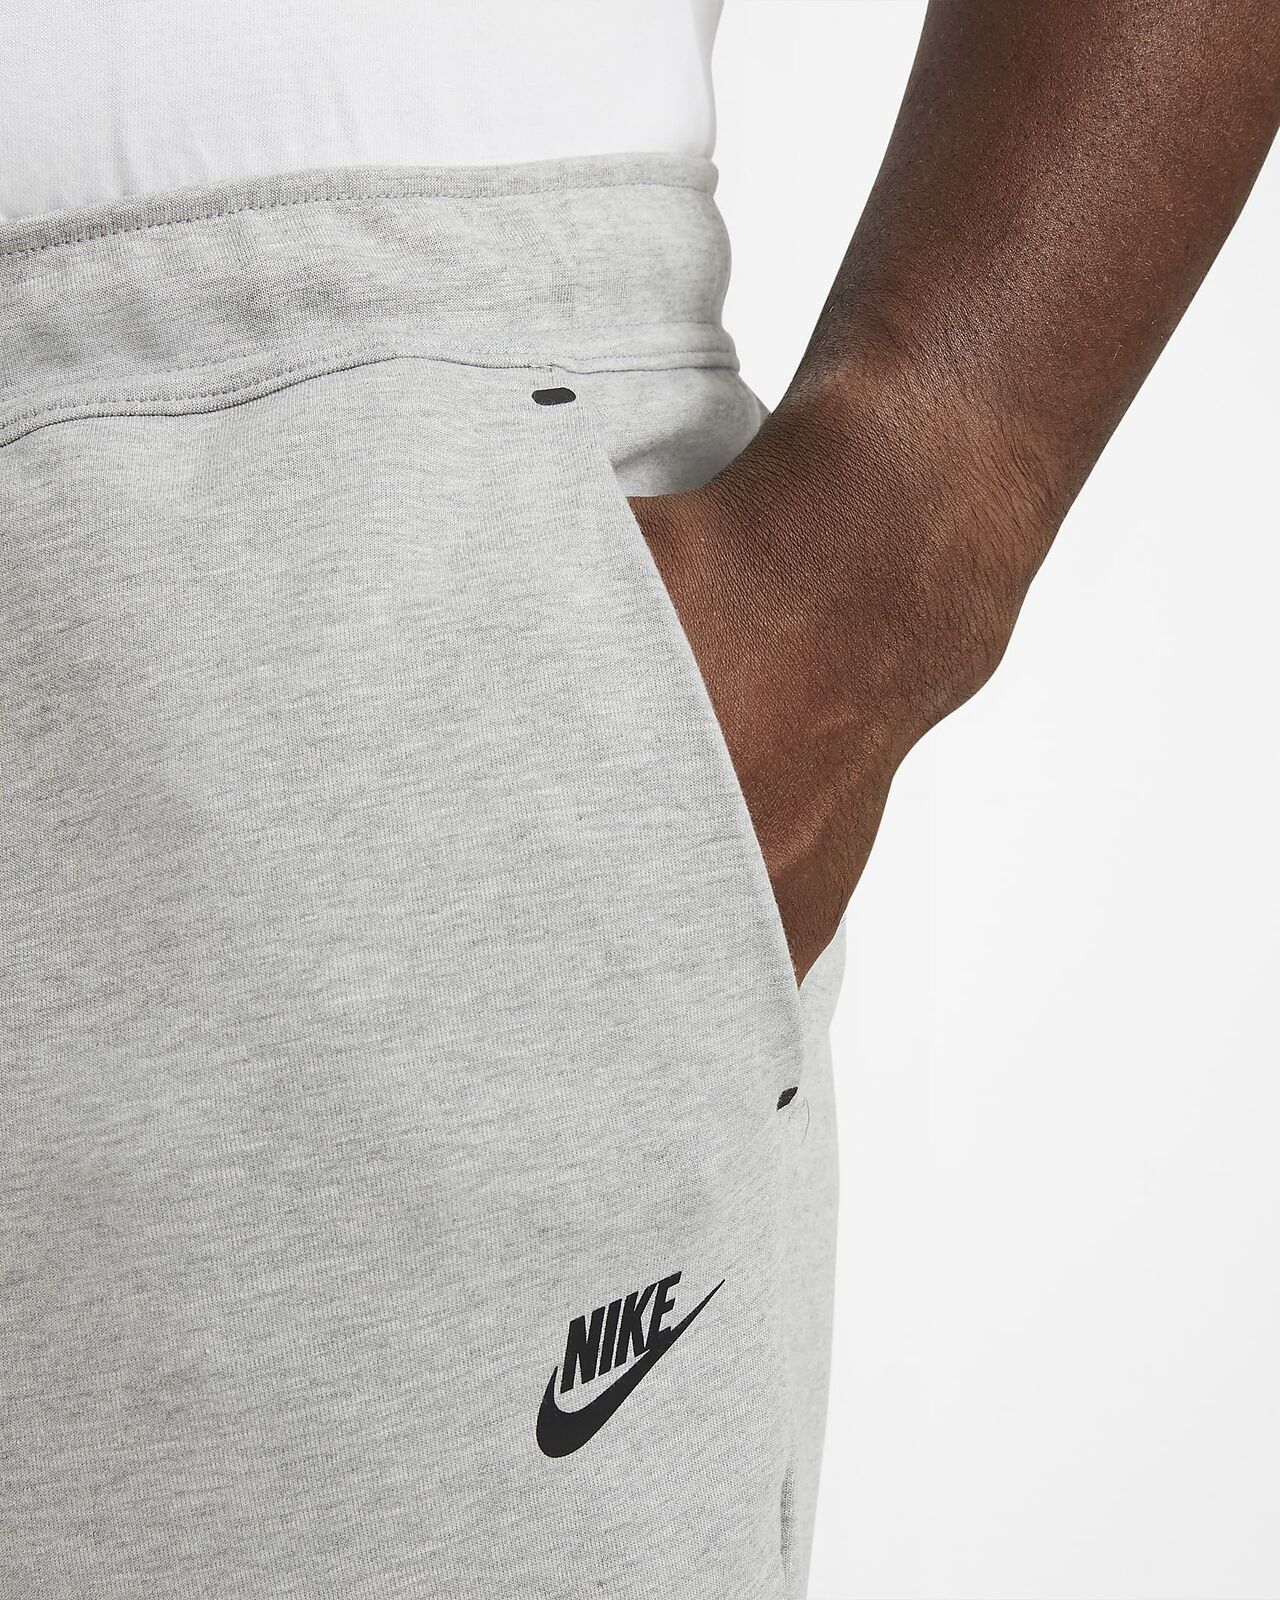 Nike Tech Fleece Joggers Pants Cuffed Heather Grey OG CU4495-063 Men's ...